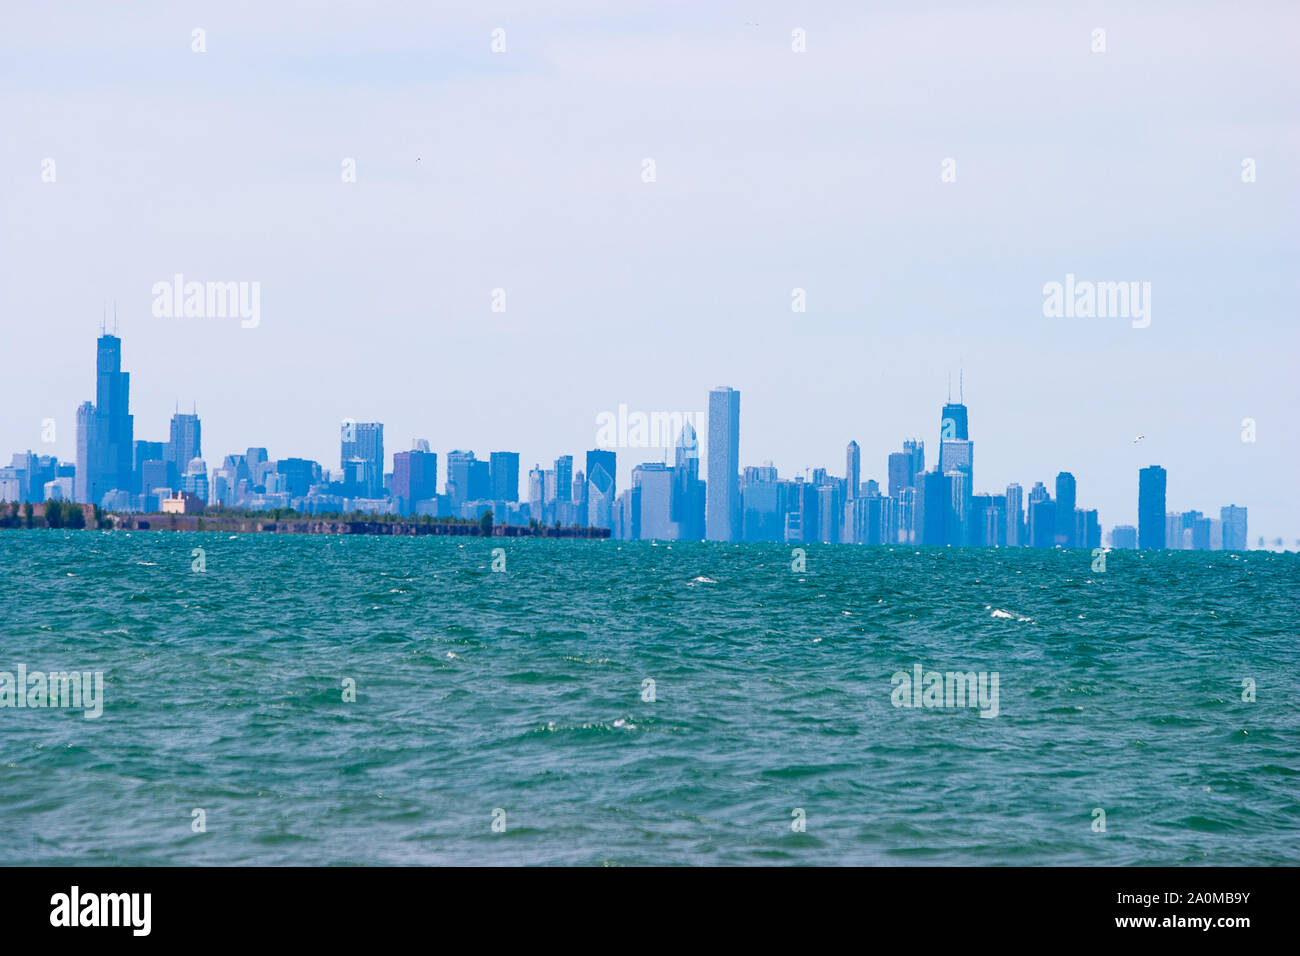 Chicago Skyline Across Lake Michigan from Indiana Shore Stock Photo - Alamy